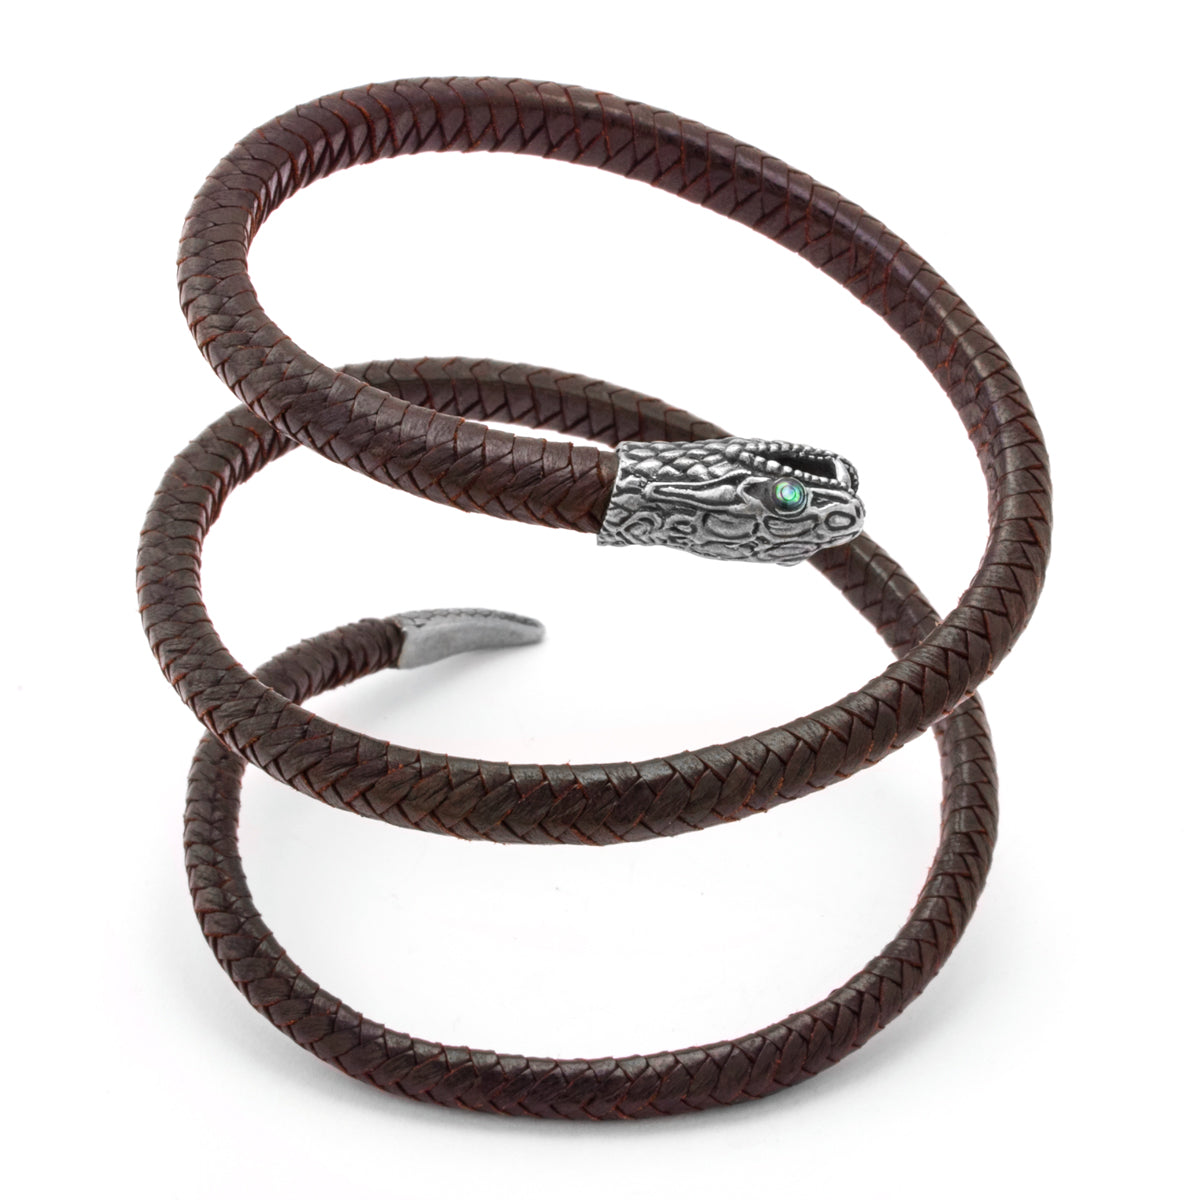 Small Triple Wrap Brown Leather Snake Bracelet